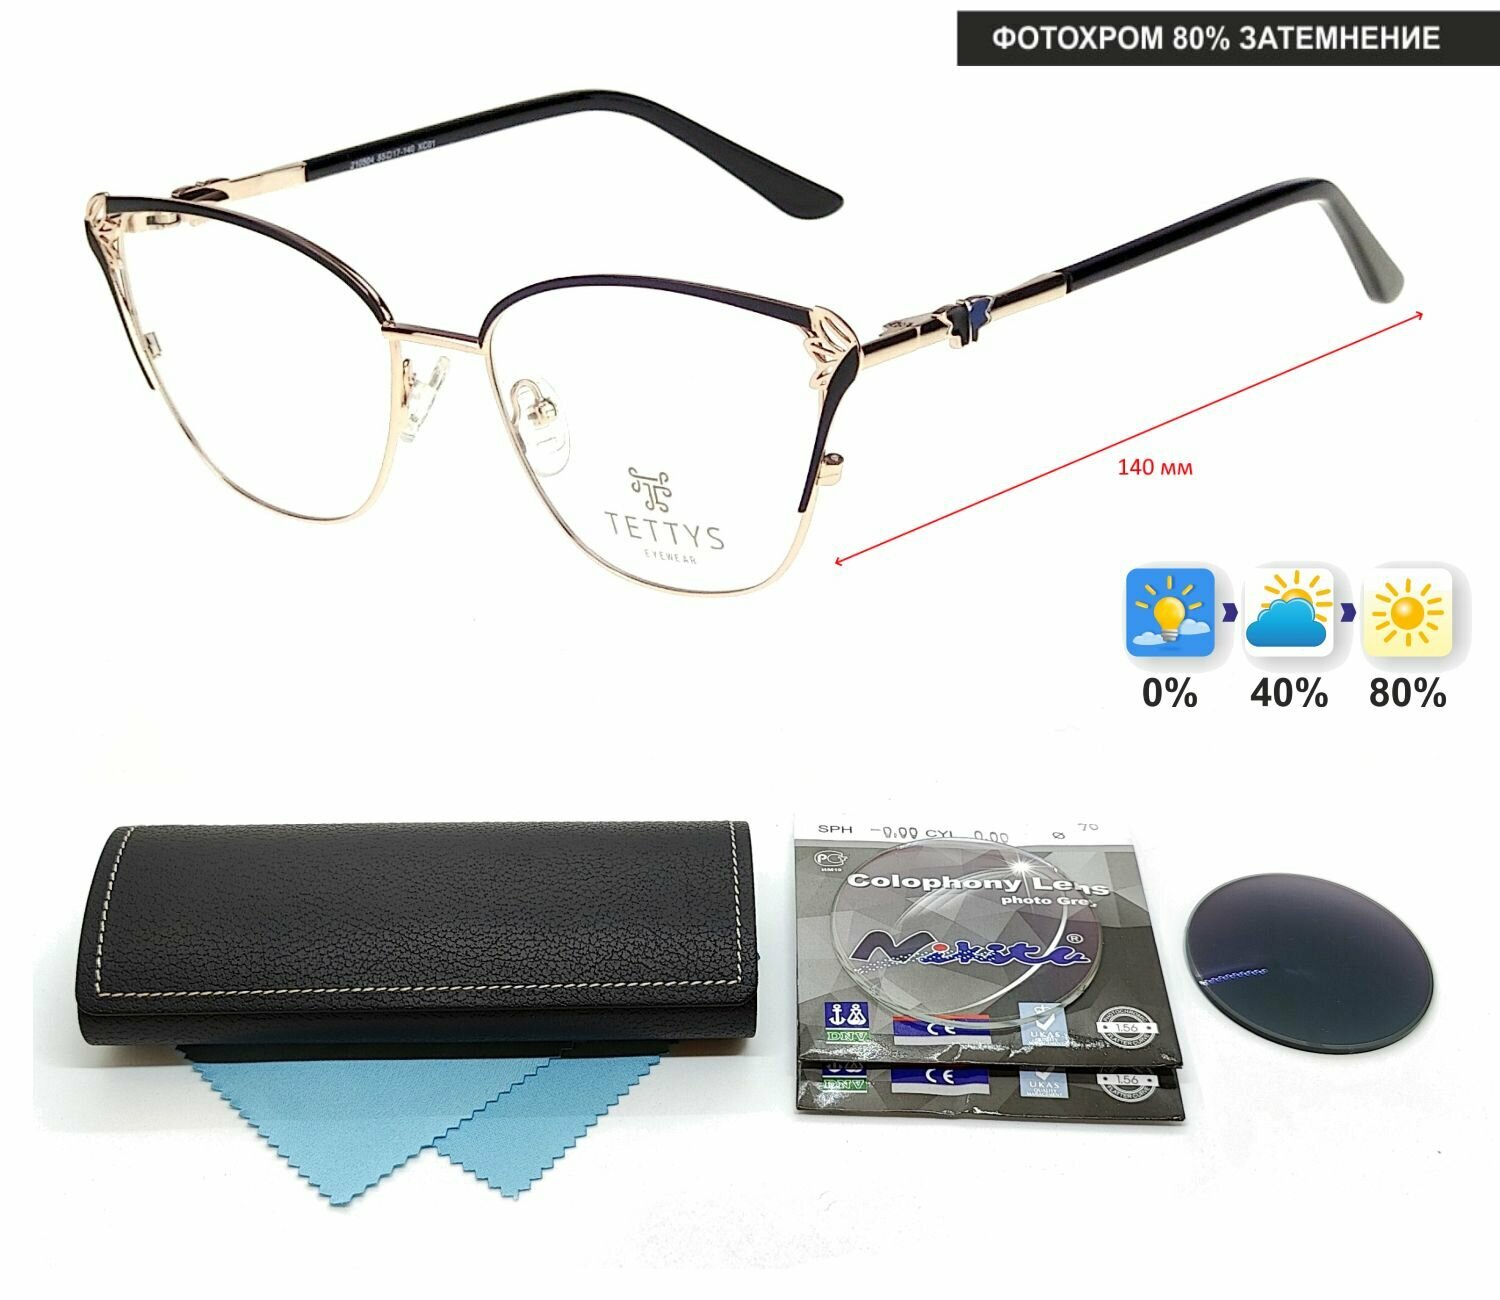 Фотохромные очки с футляром на магните TETTYS EYEWEAR мод. 210504 Цвет 1 с линзами NIKITA 1.56 Colophony GRAY, HMC+ +2.25 РЦ 66-68